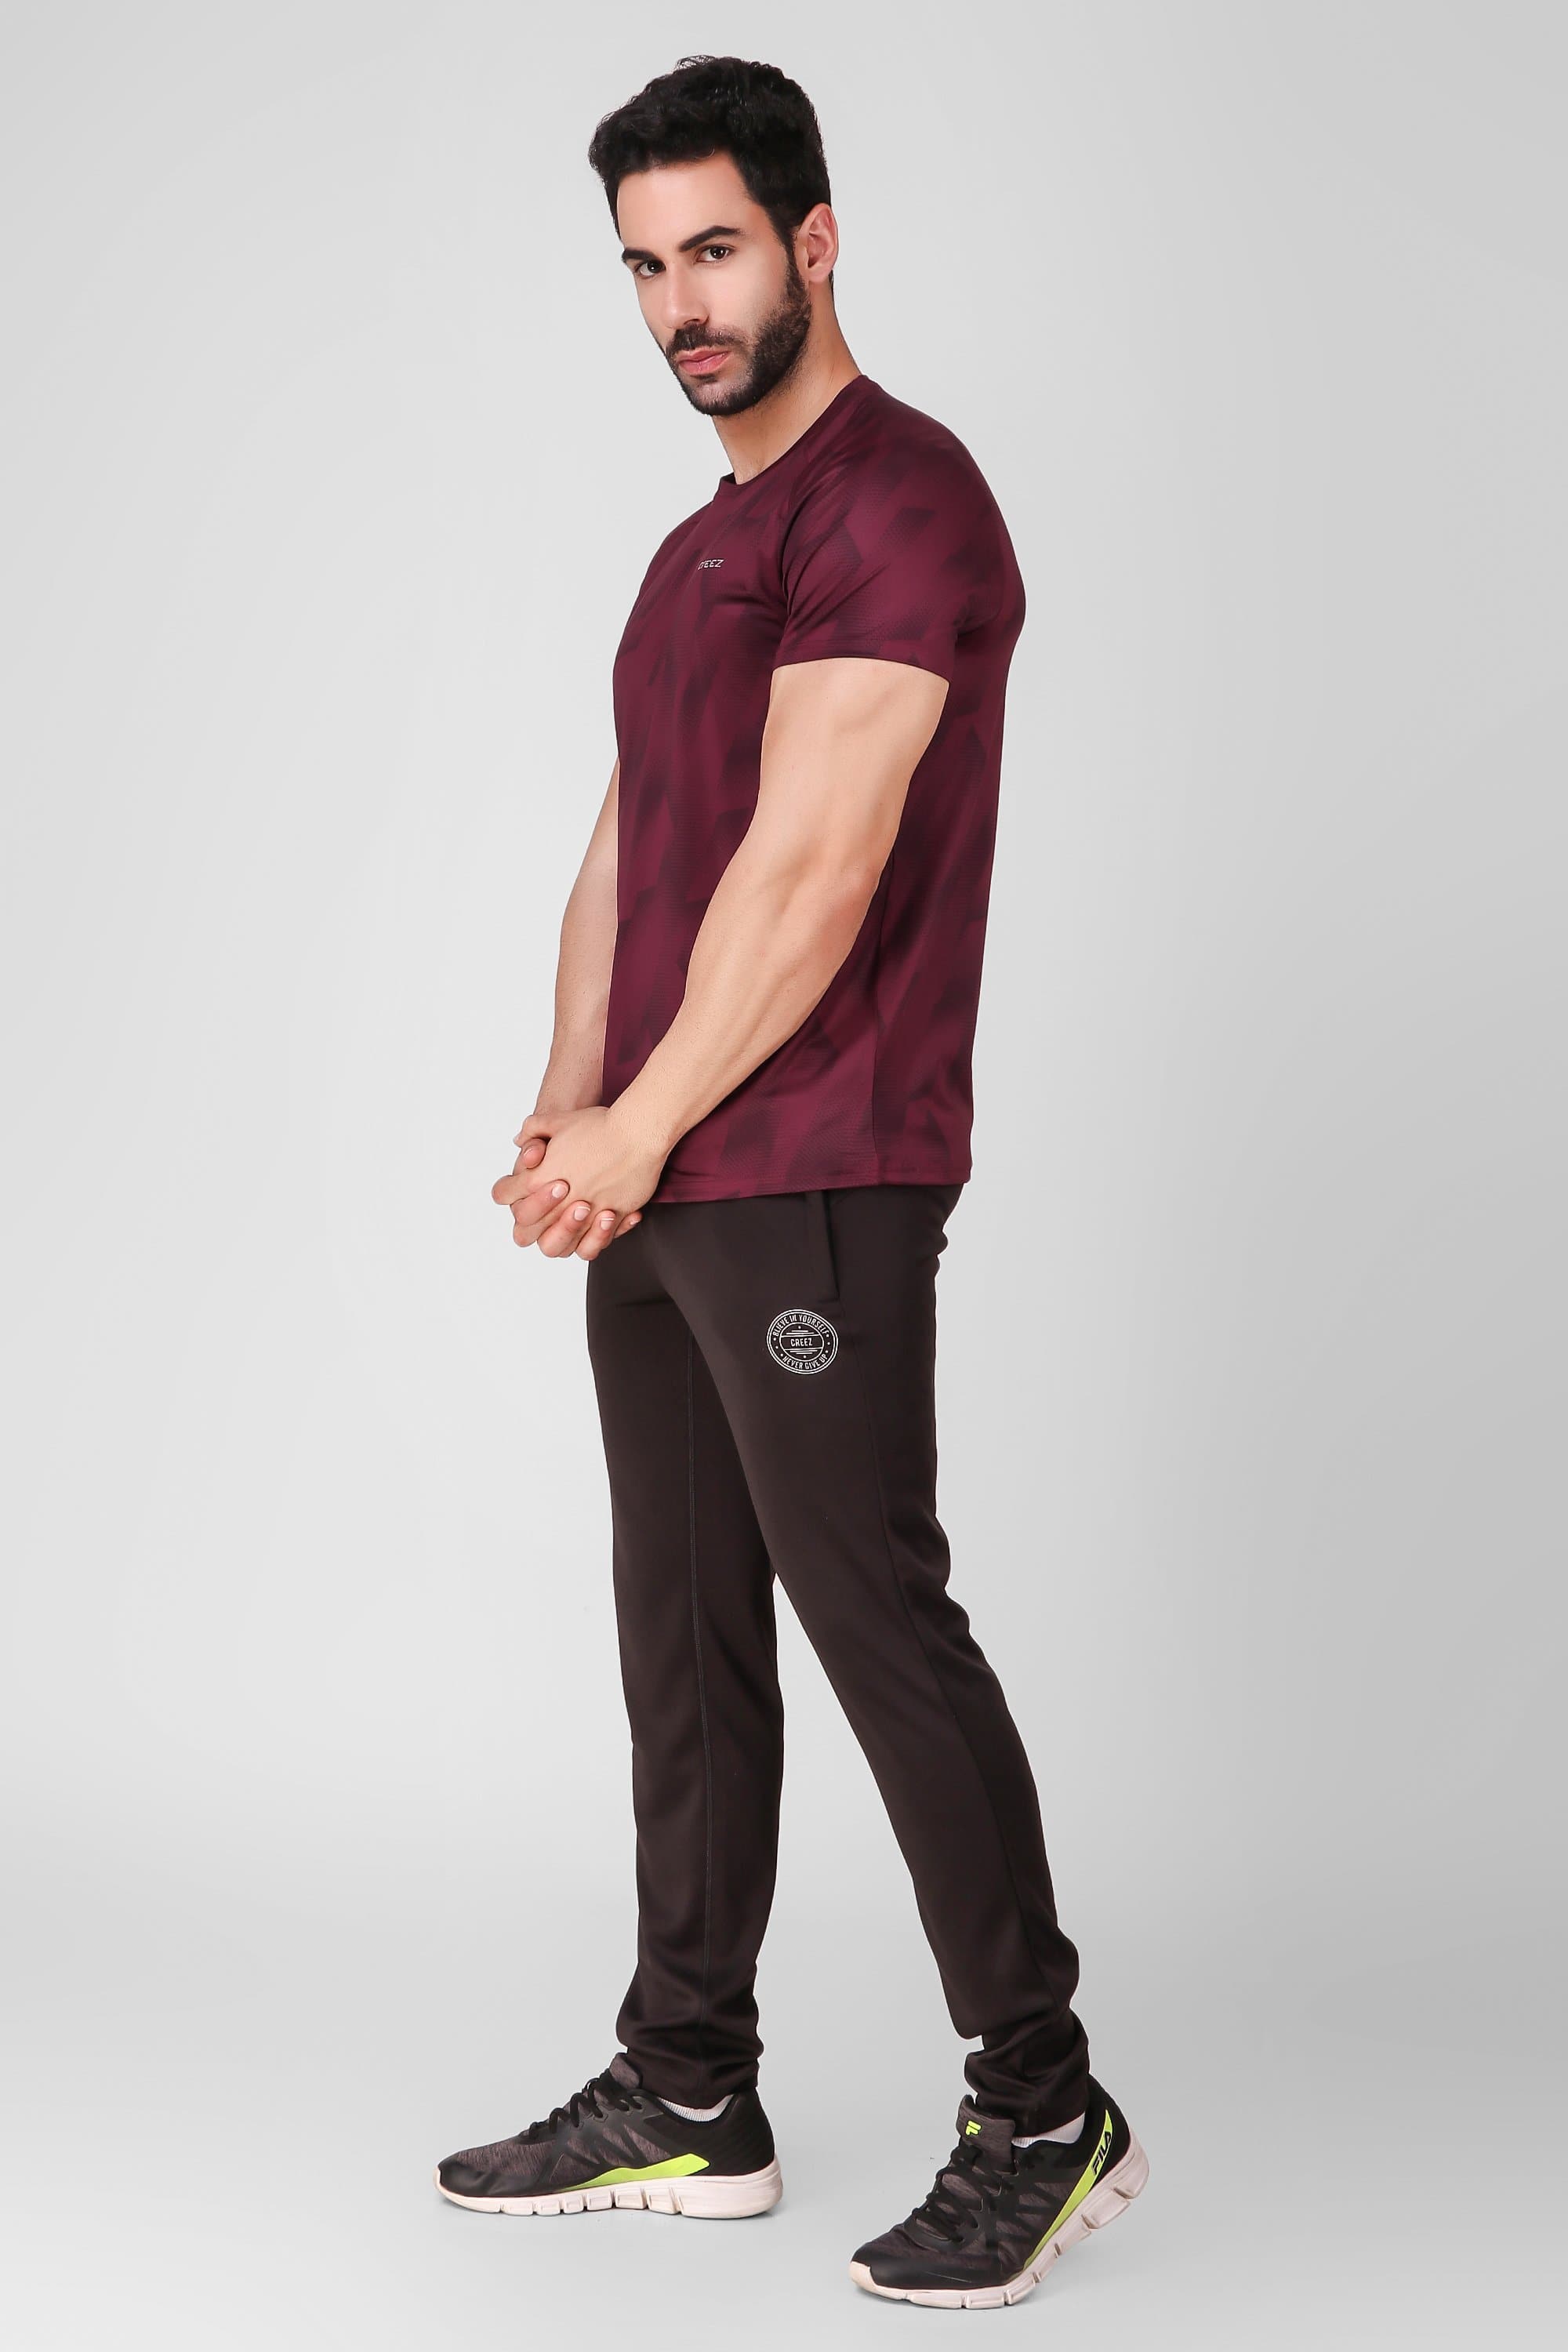 Creez Hustle Printed Stretchable Sports and Gym Dark Olive Men's Tshirt Full 01